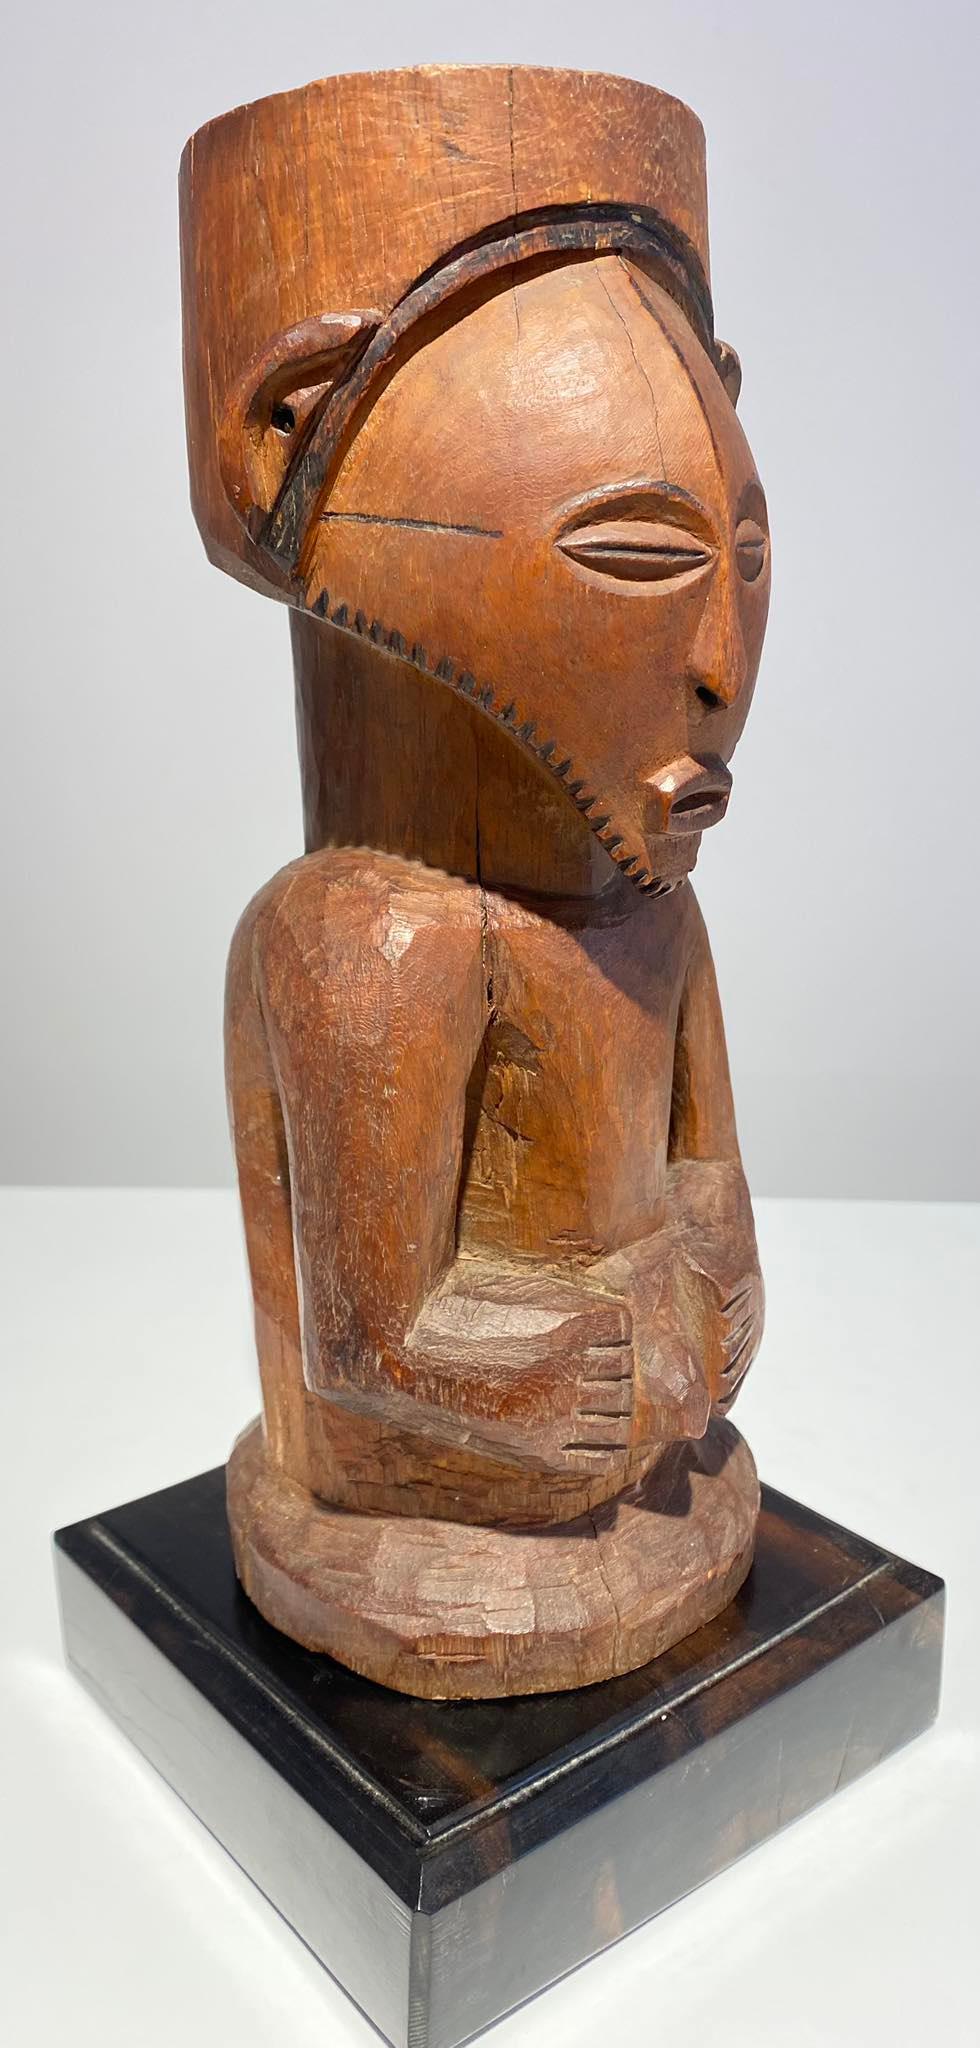 Kusu wooden ancestor fetish ca 1900 DR Congo Africa Central African Tribal Art For Sale 10